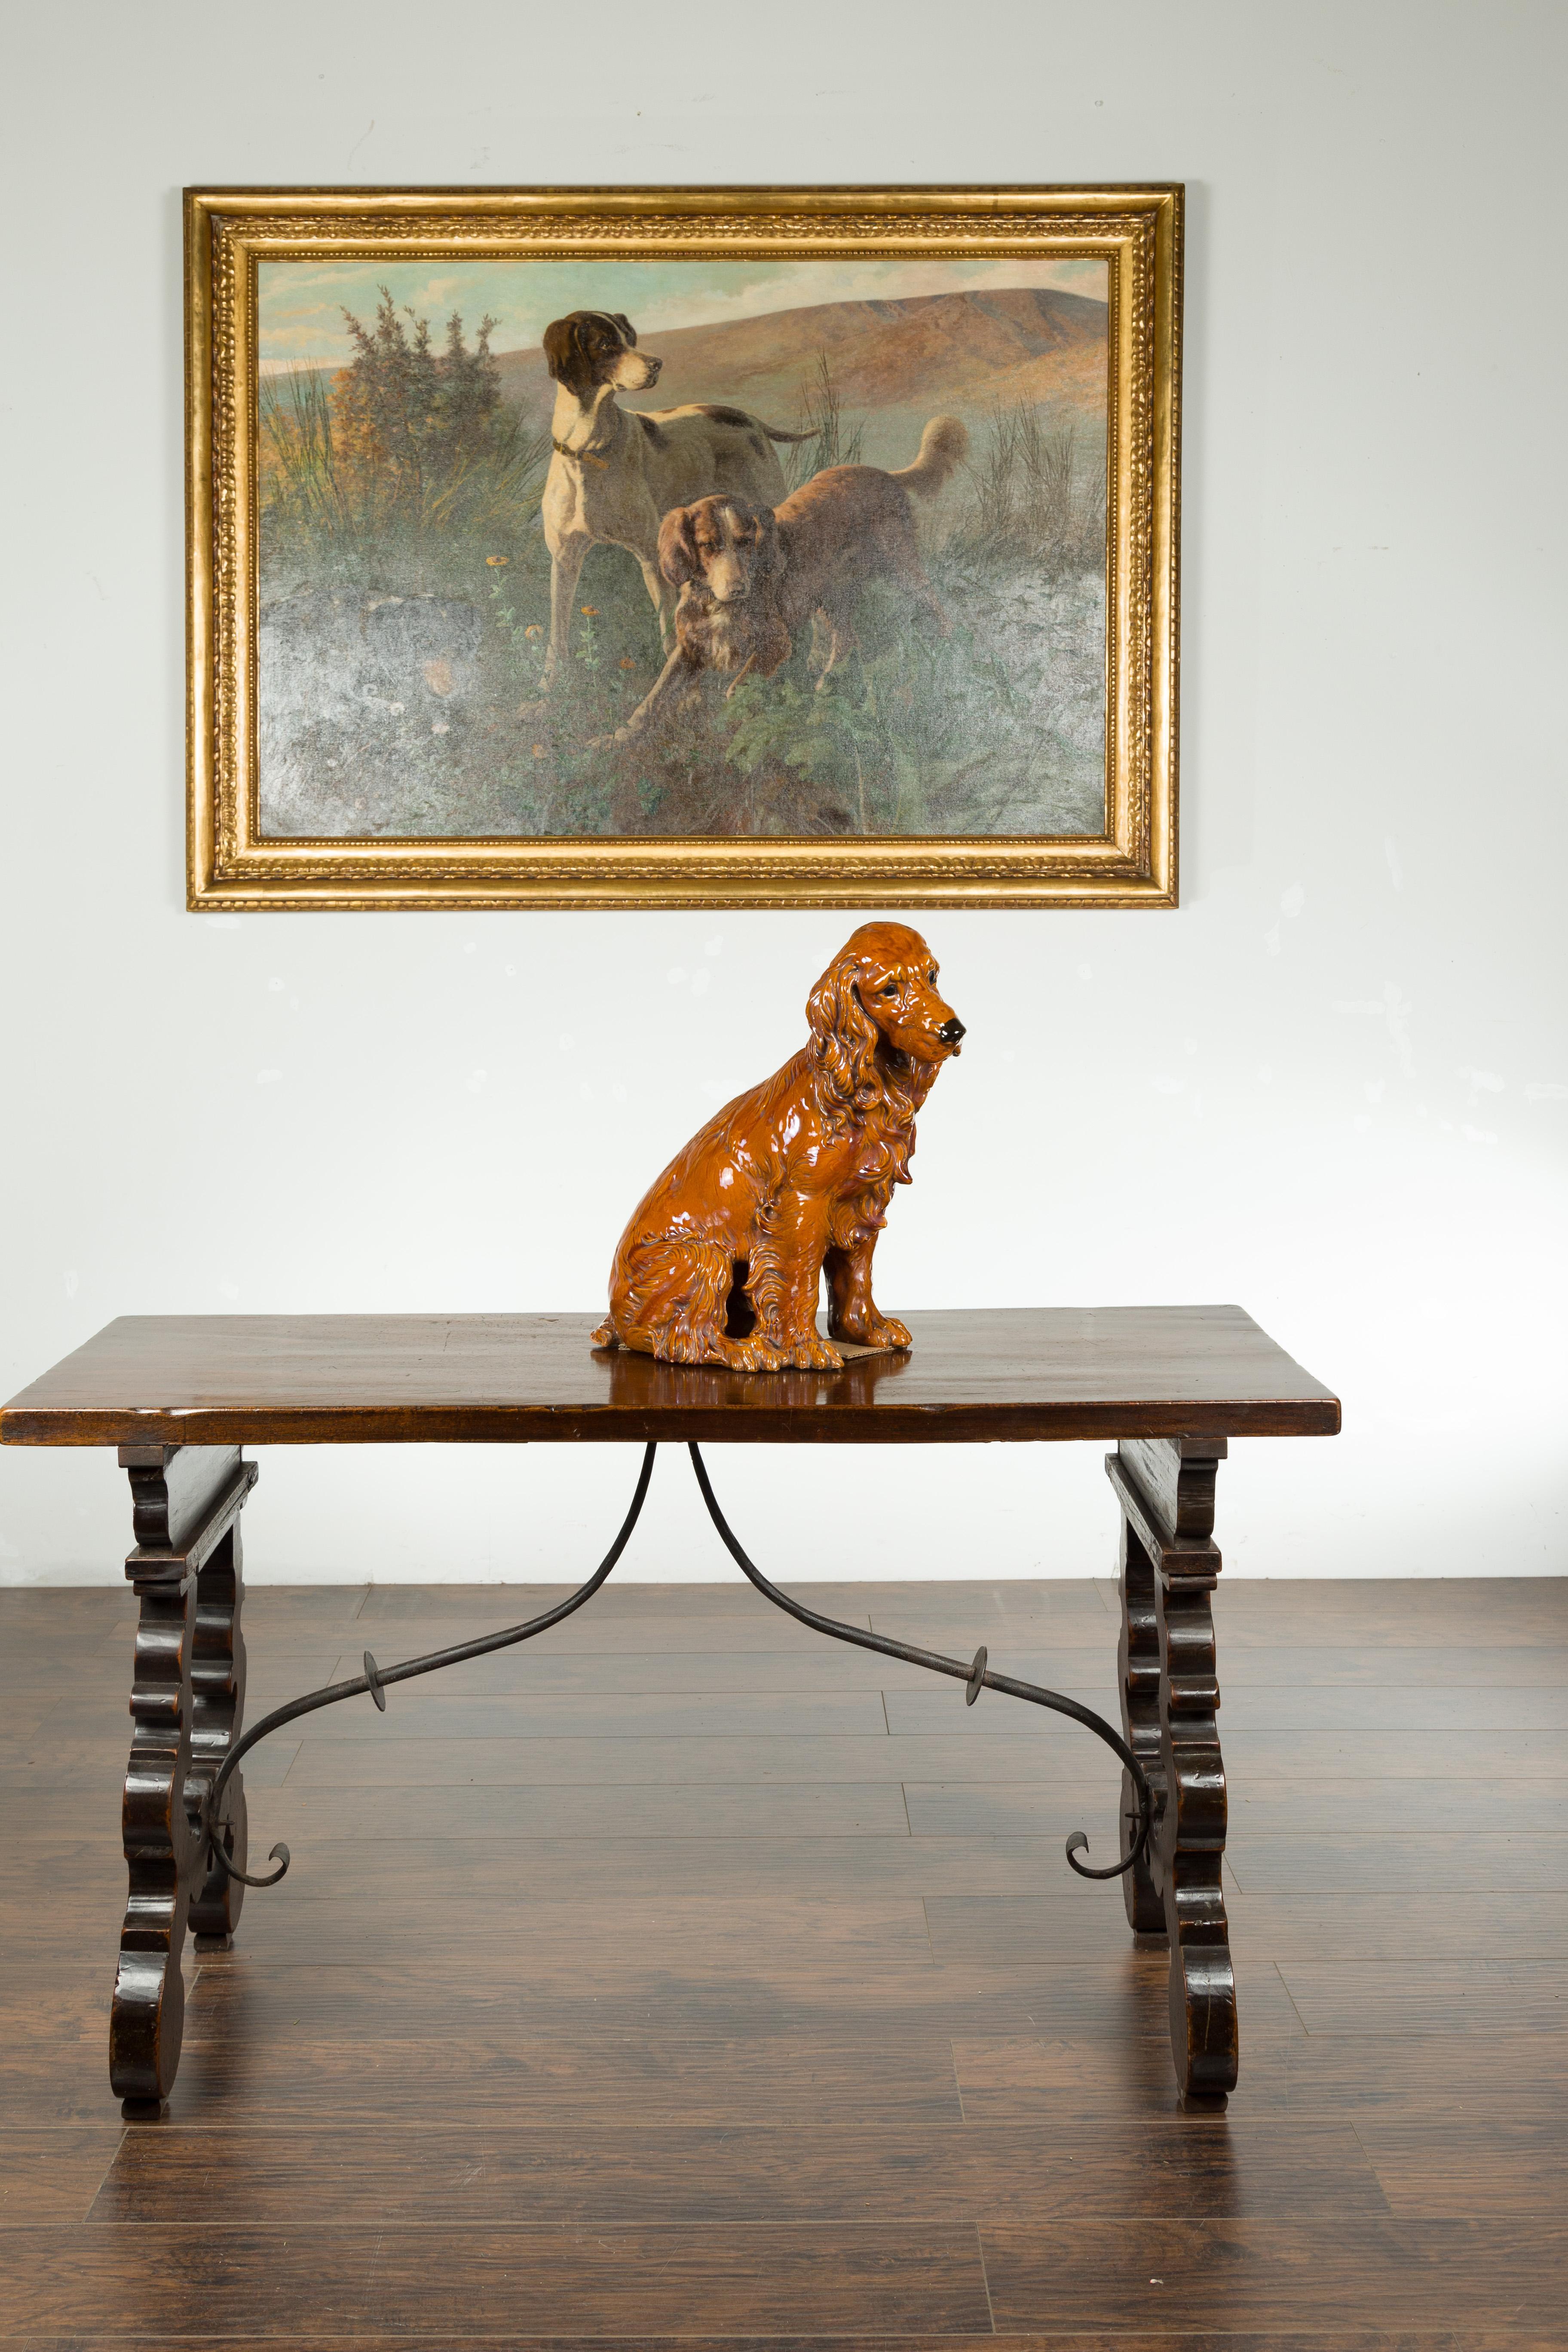 20th Century Vintage Glazed Terracotta Dog Sculpture Depicting a Russet Cocker Spaniel